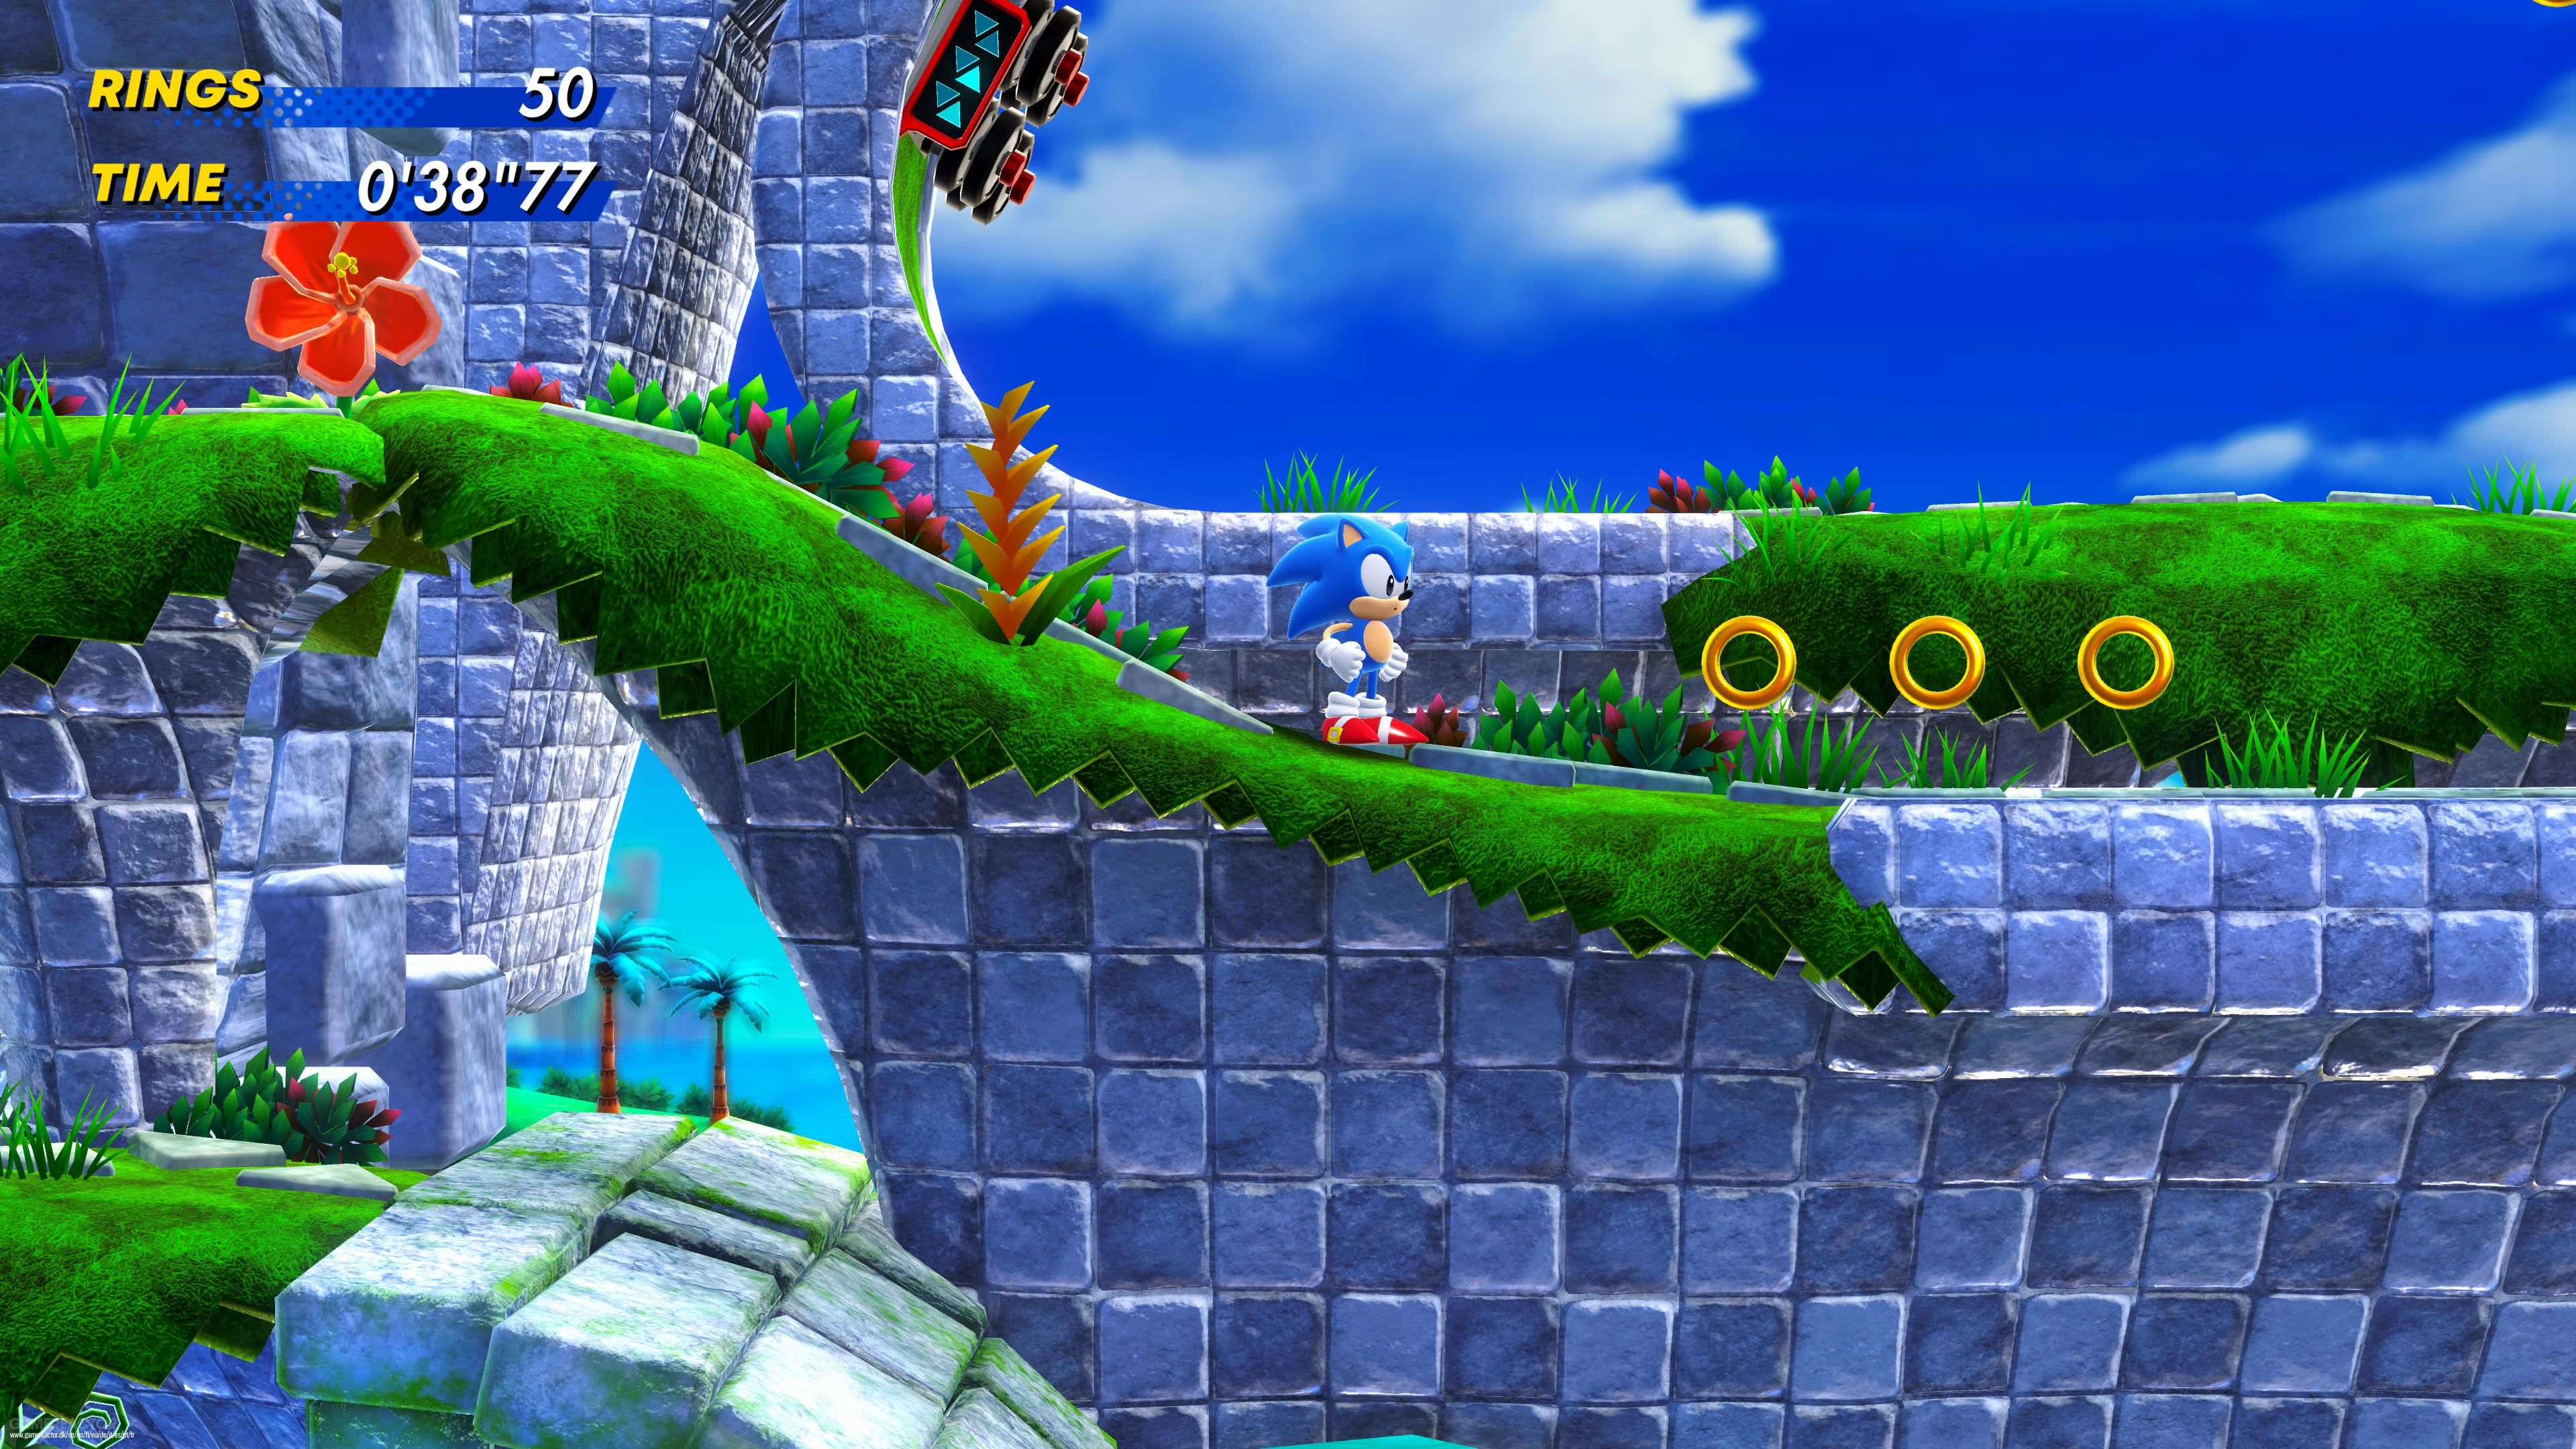 Jogo PS5 Sonic Superstars